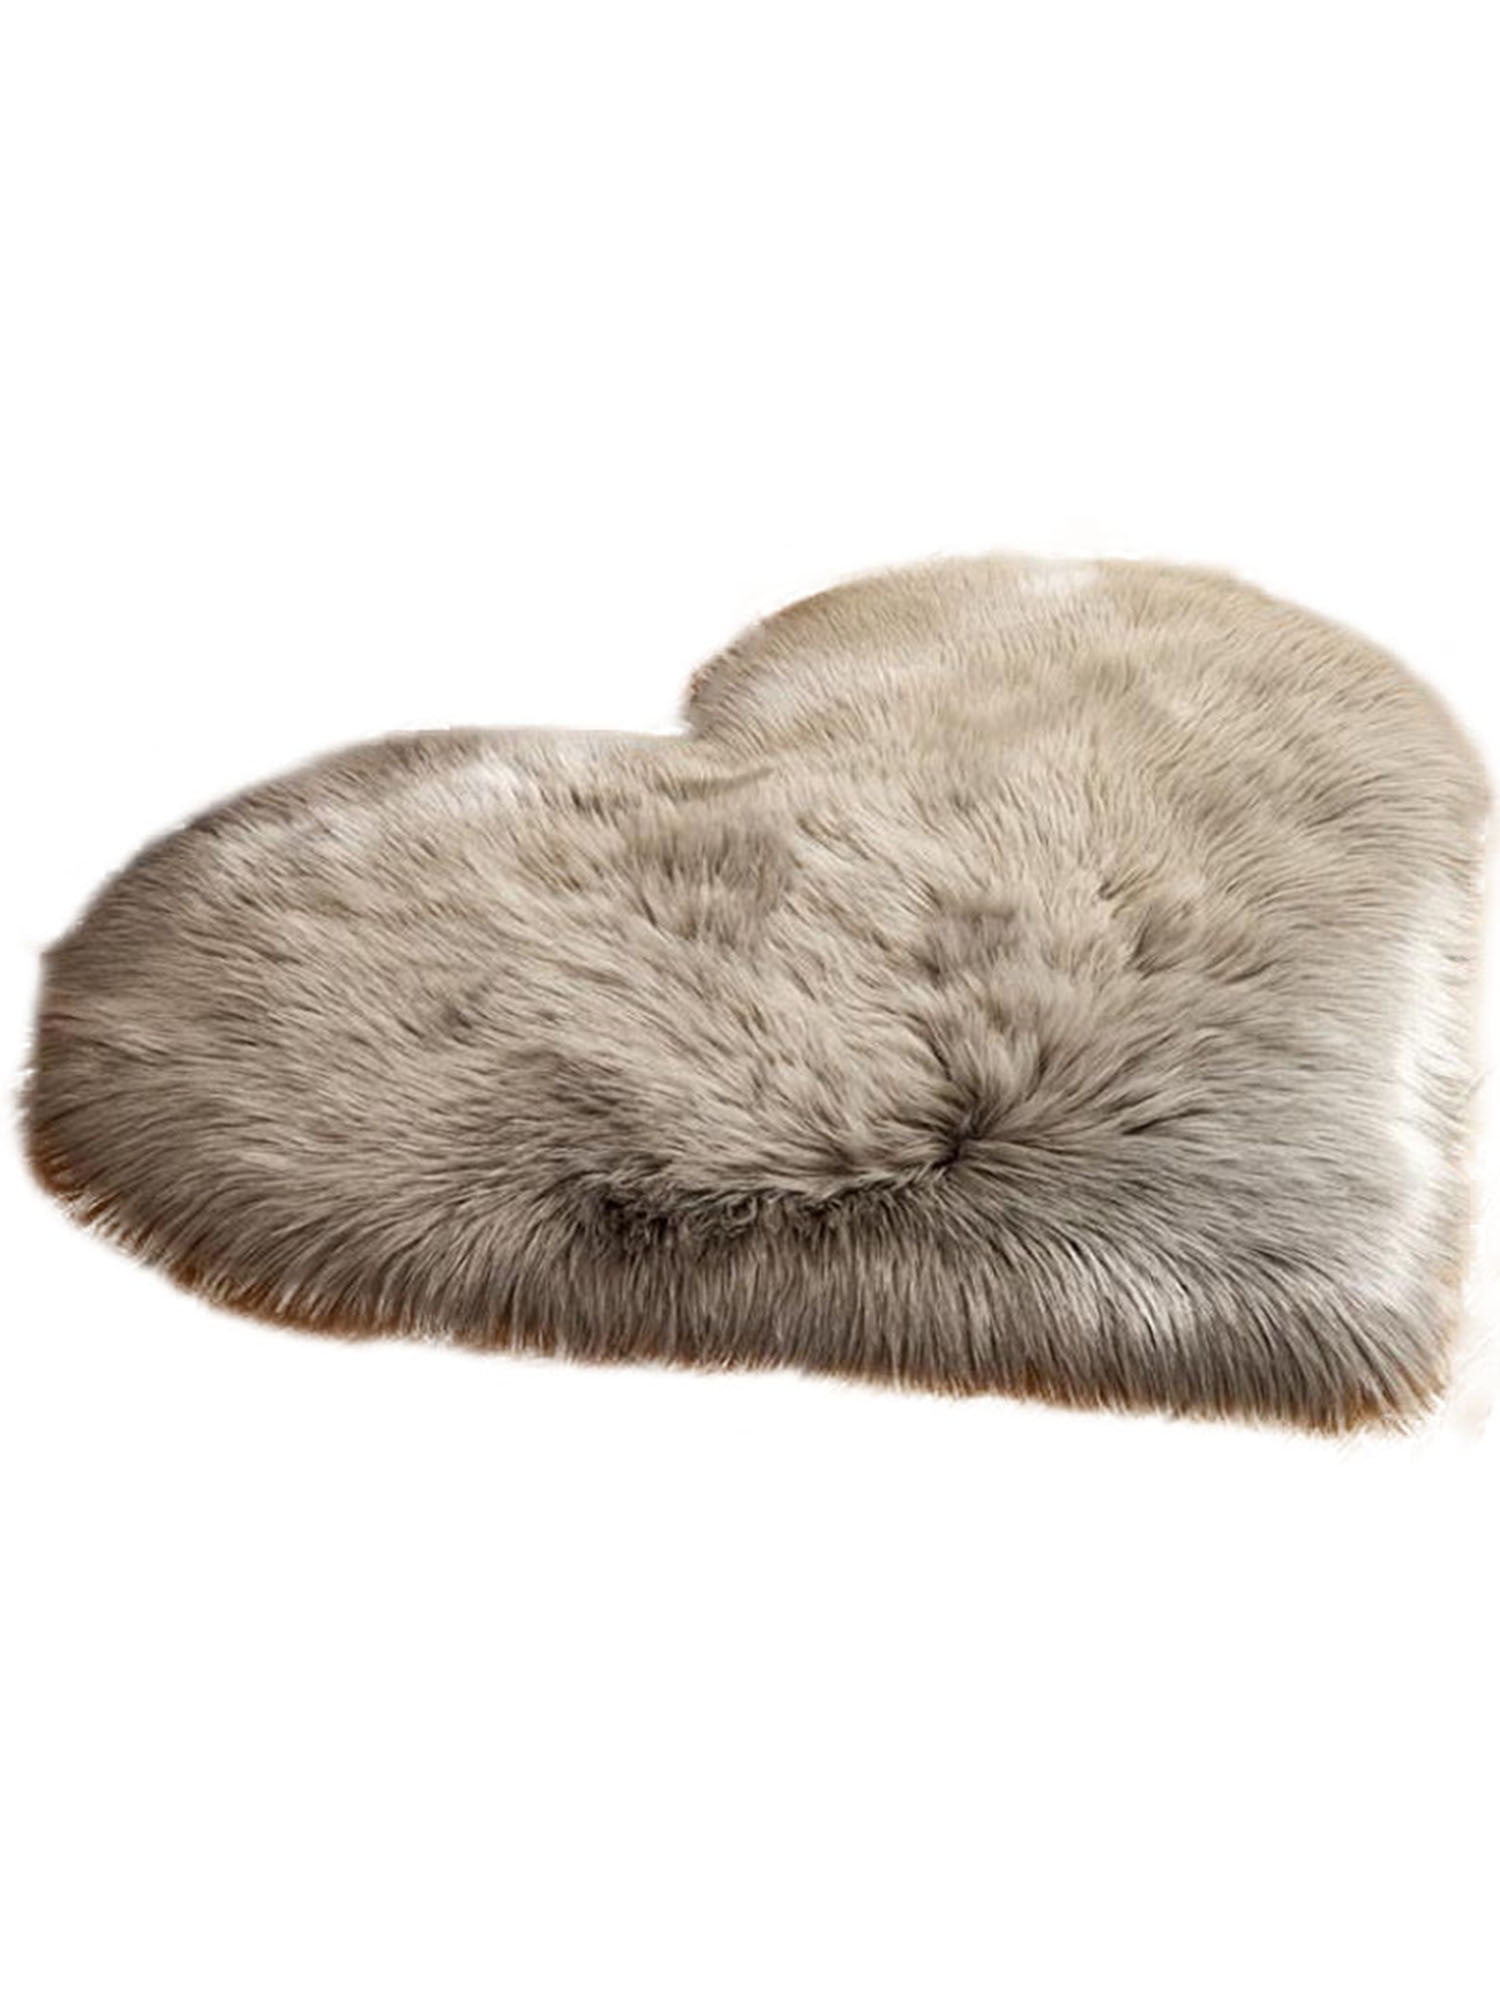 Fluffy Heart Shaped Rug Shaggy Floor Mat Soft Faux Fur Home Bedroom Hairy Carpet 